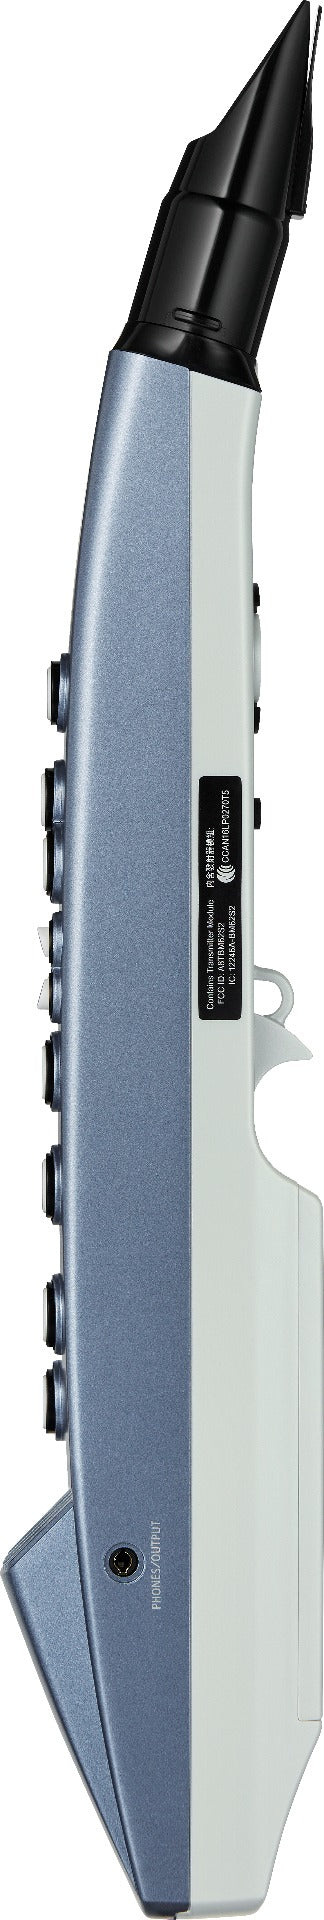 Roland Aerophone Mini AE-01 Digital Wind Instrument